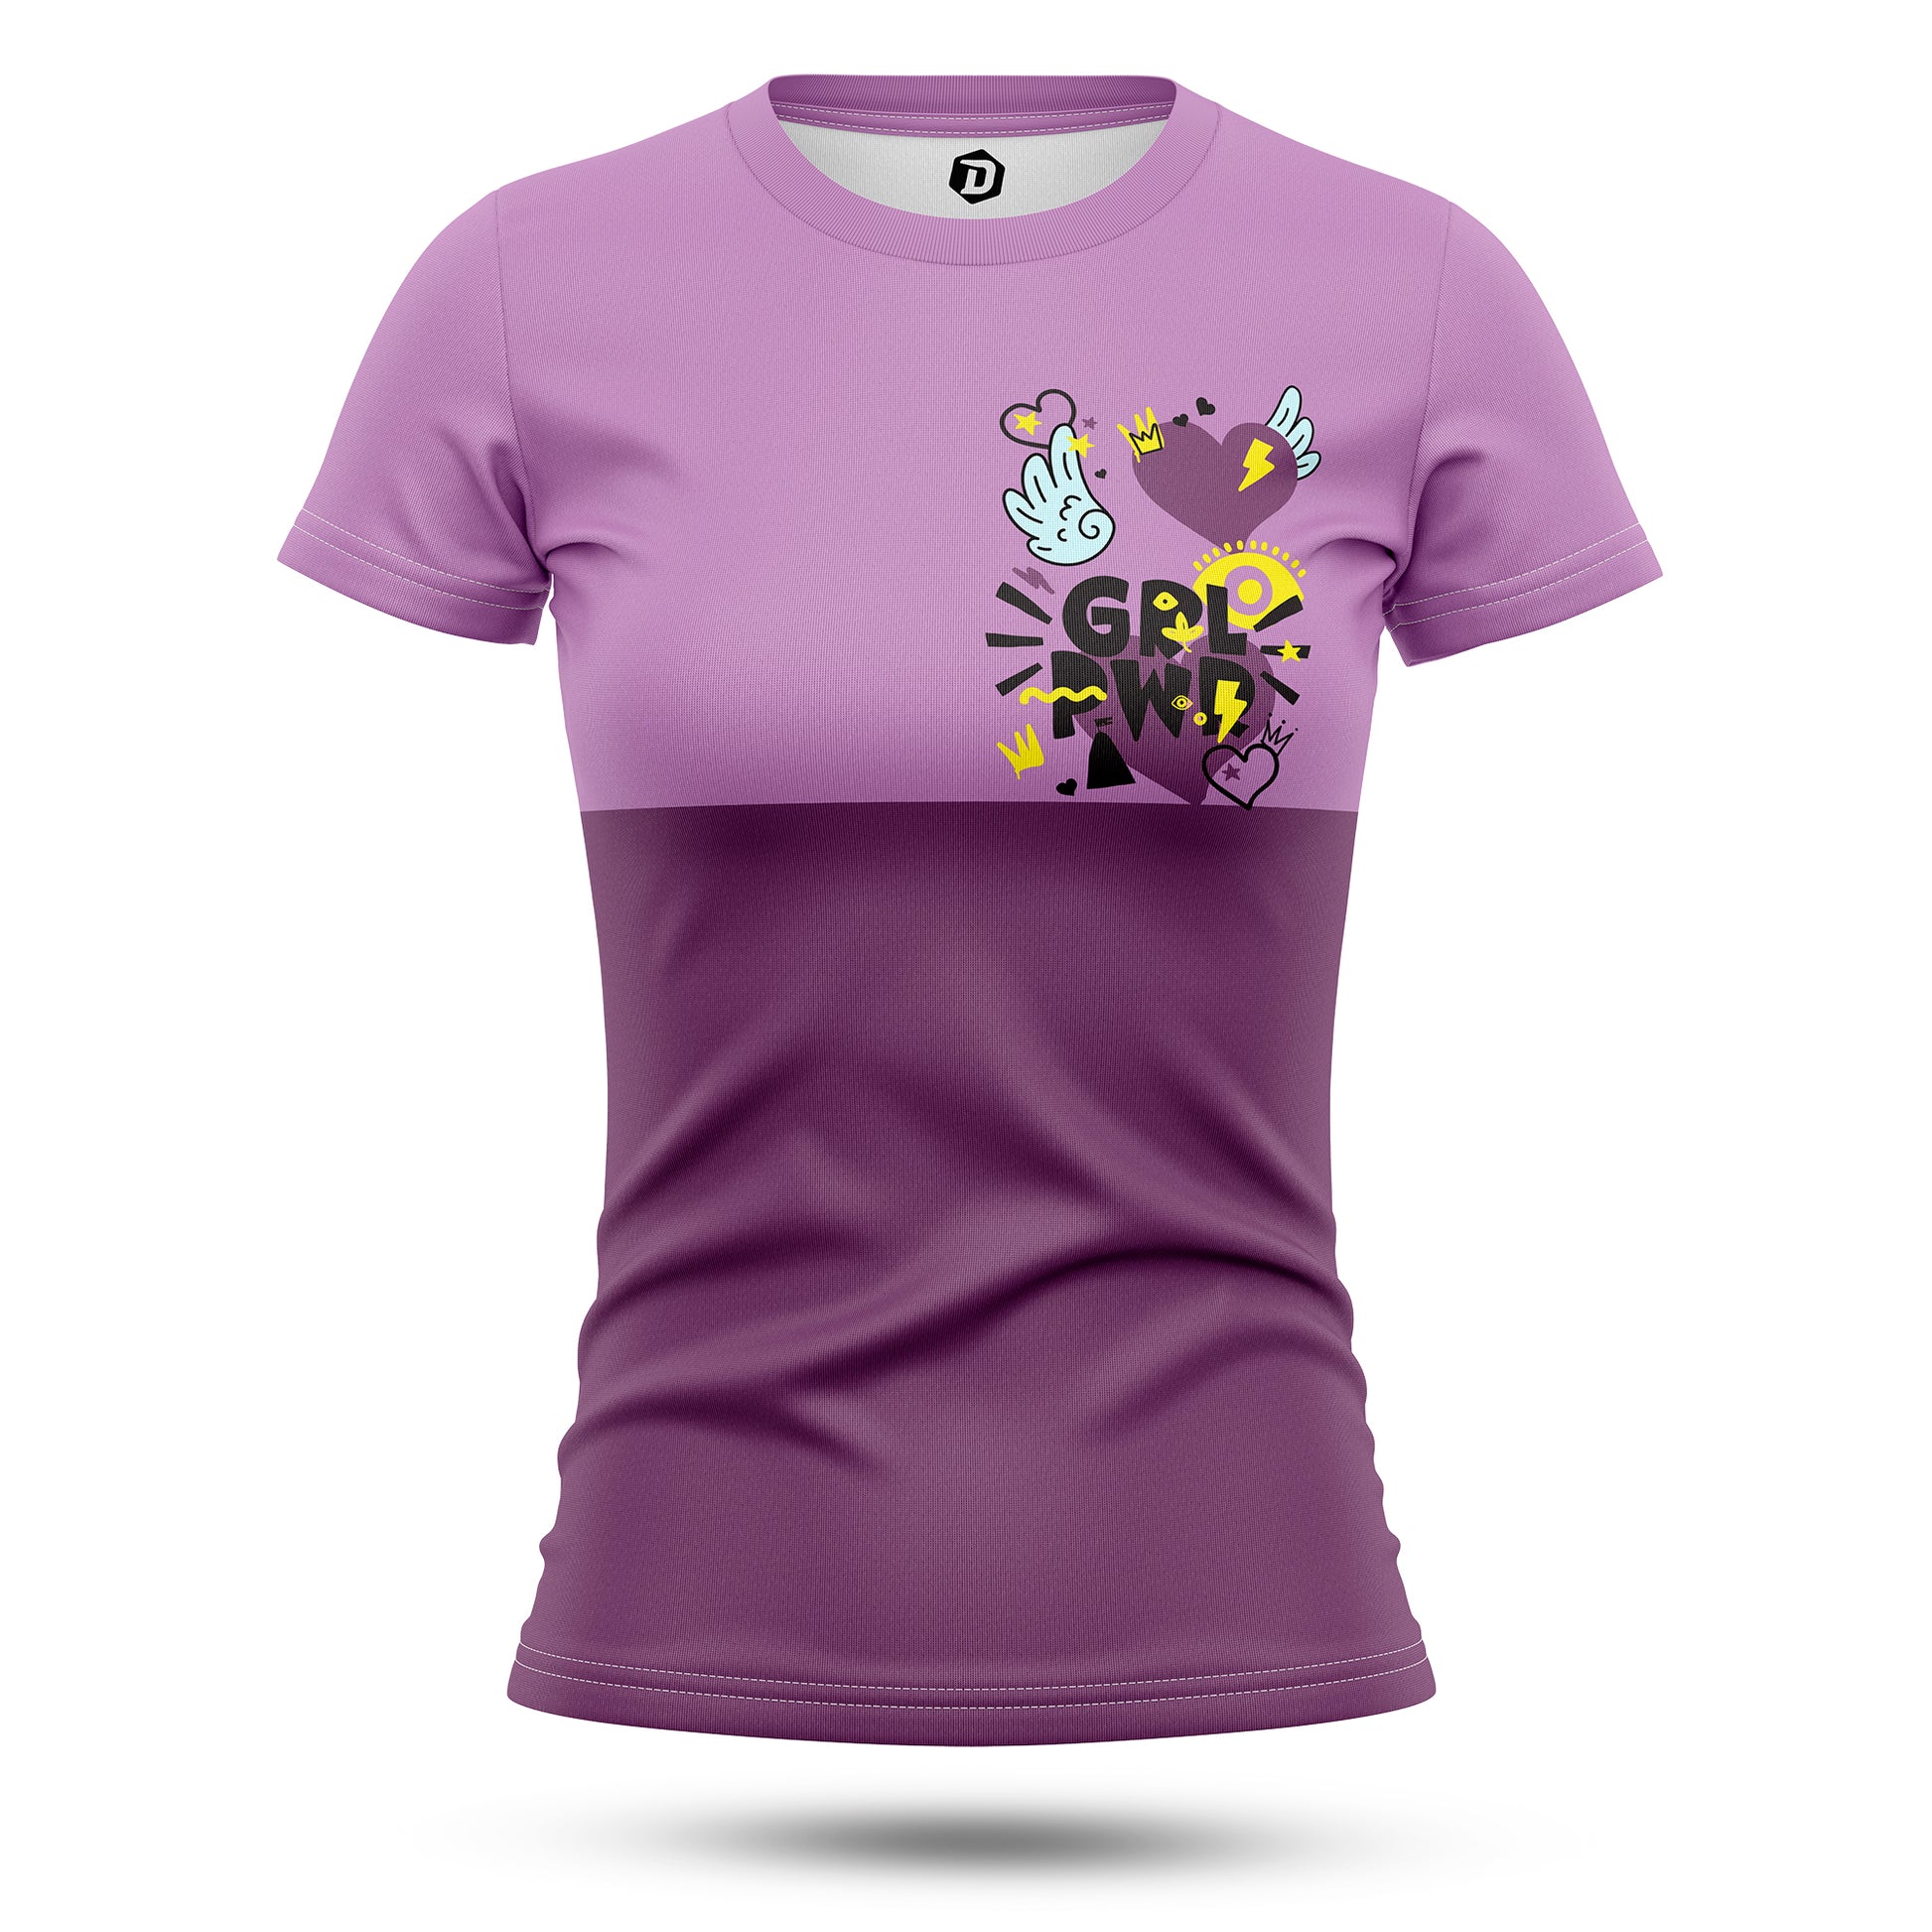 Camiseta técnica rosa GRL POWER™ - DOPAMINEOFICIAL